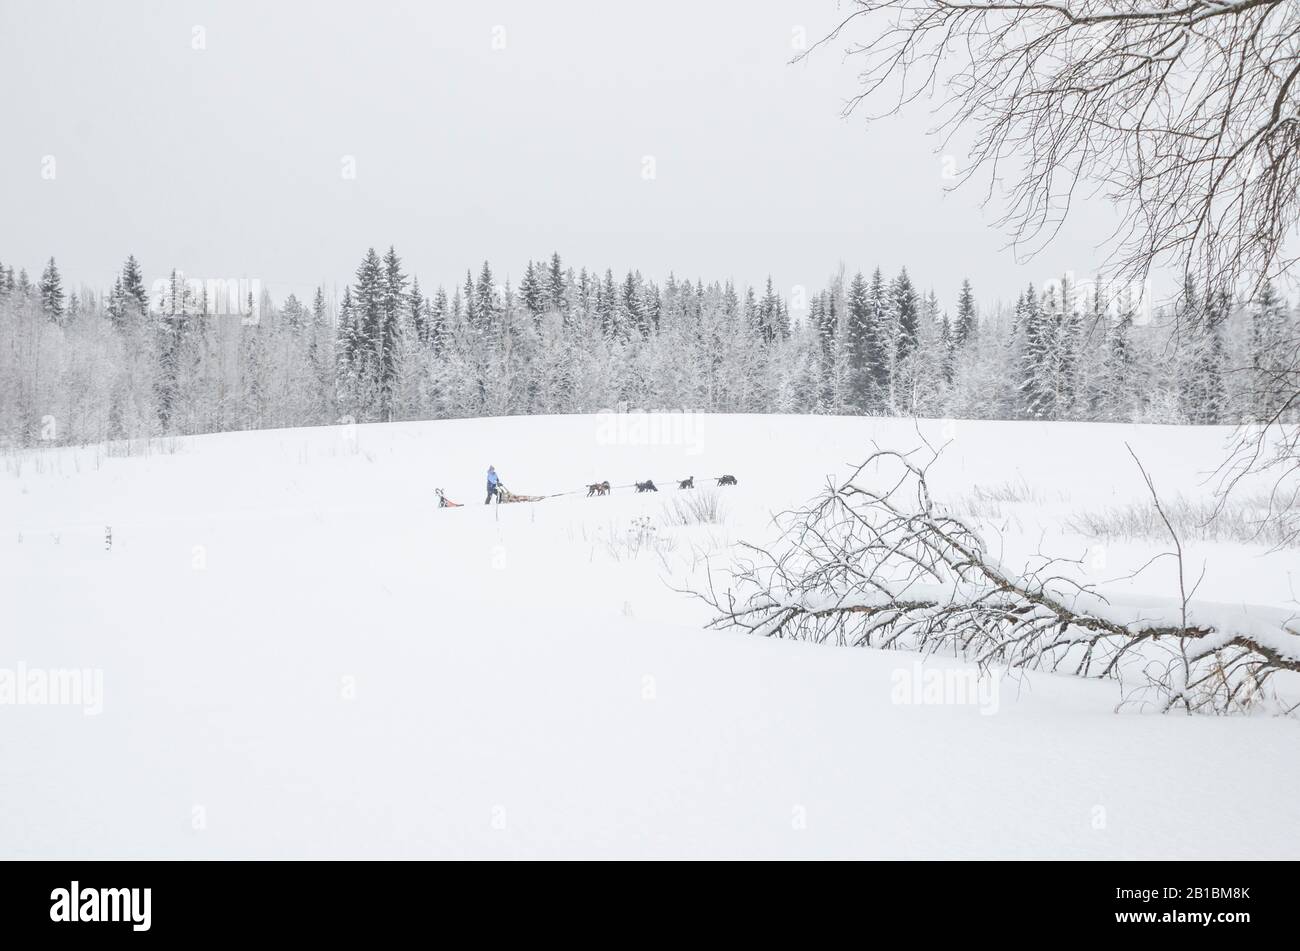 A dog team runs across a snowy lake. Stock Photo